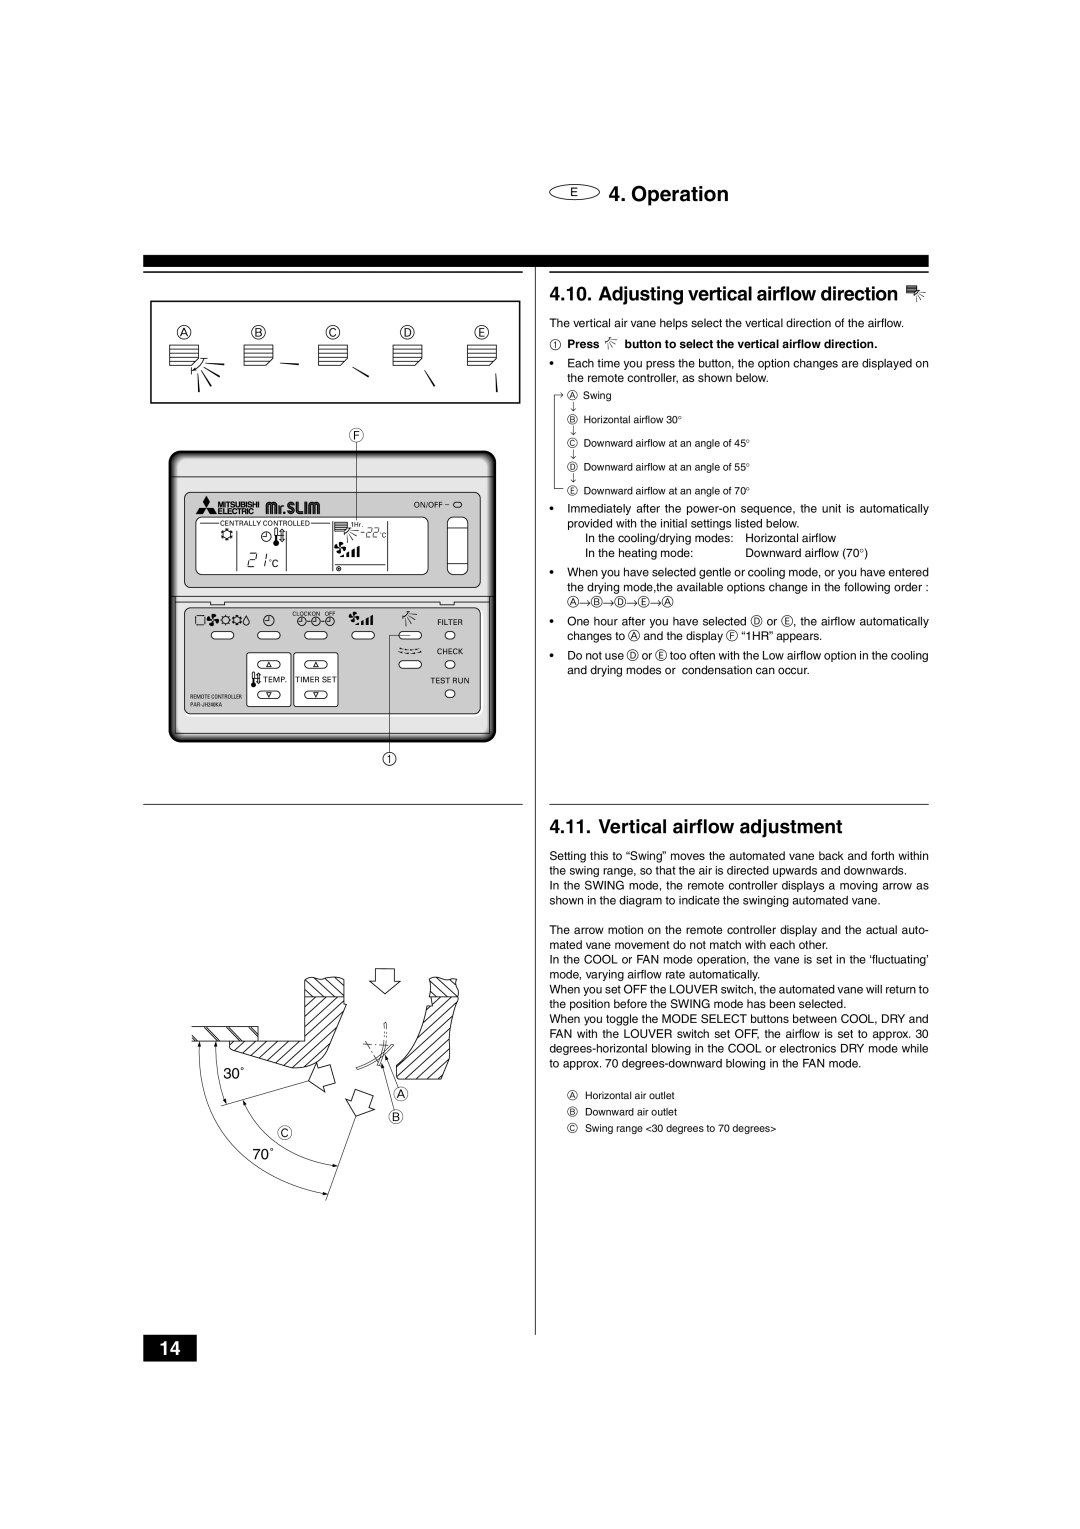 Mitsubishi Electronics 2.5KKC, PLH-2 operation manual Adjusting vertical airflow direction, Vertical airflow adjustment 